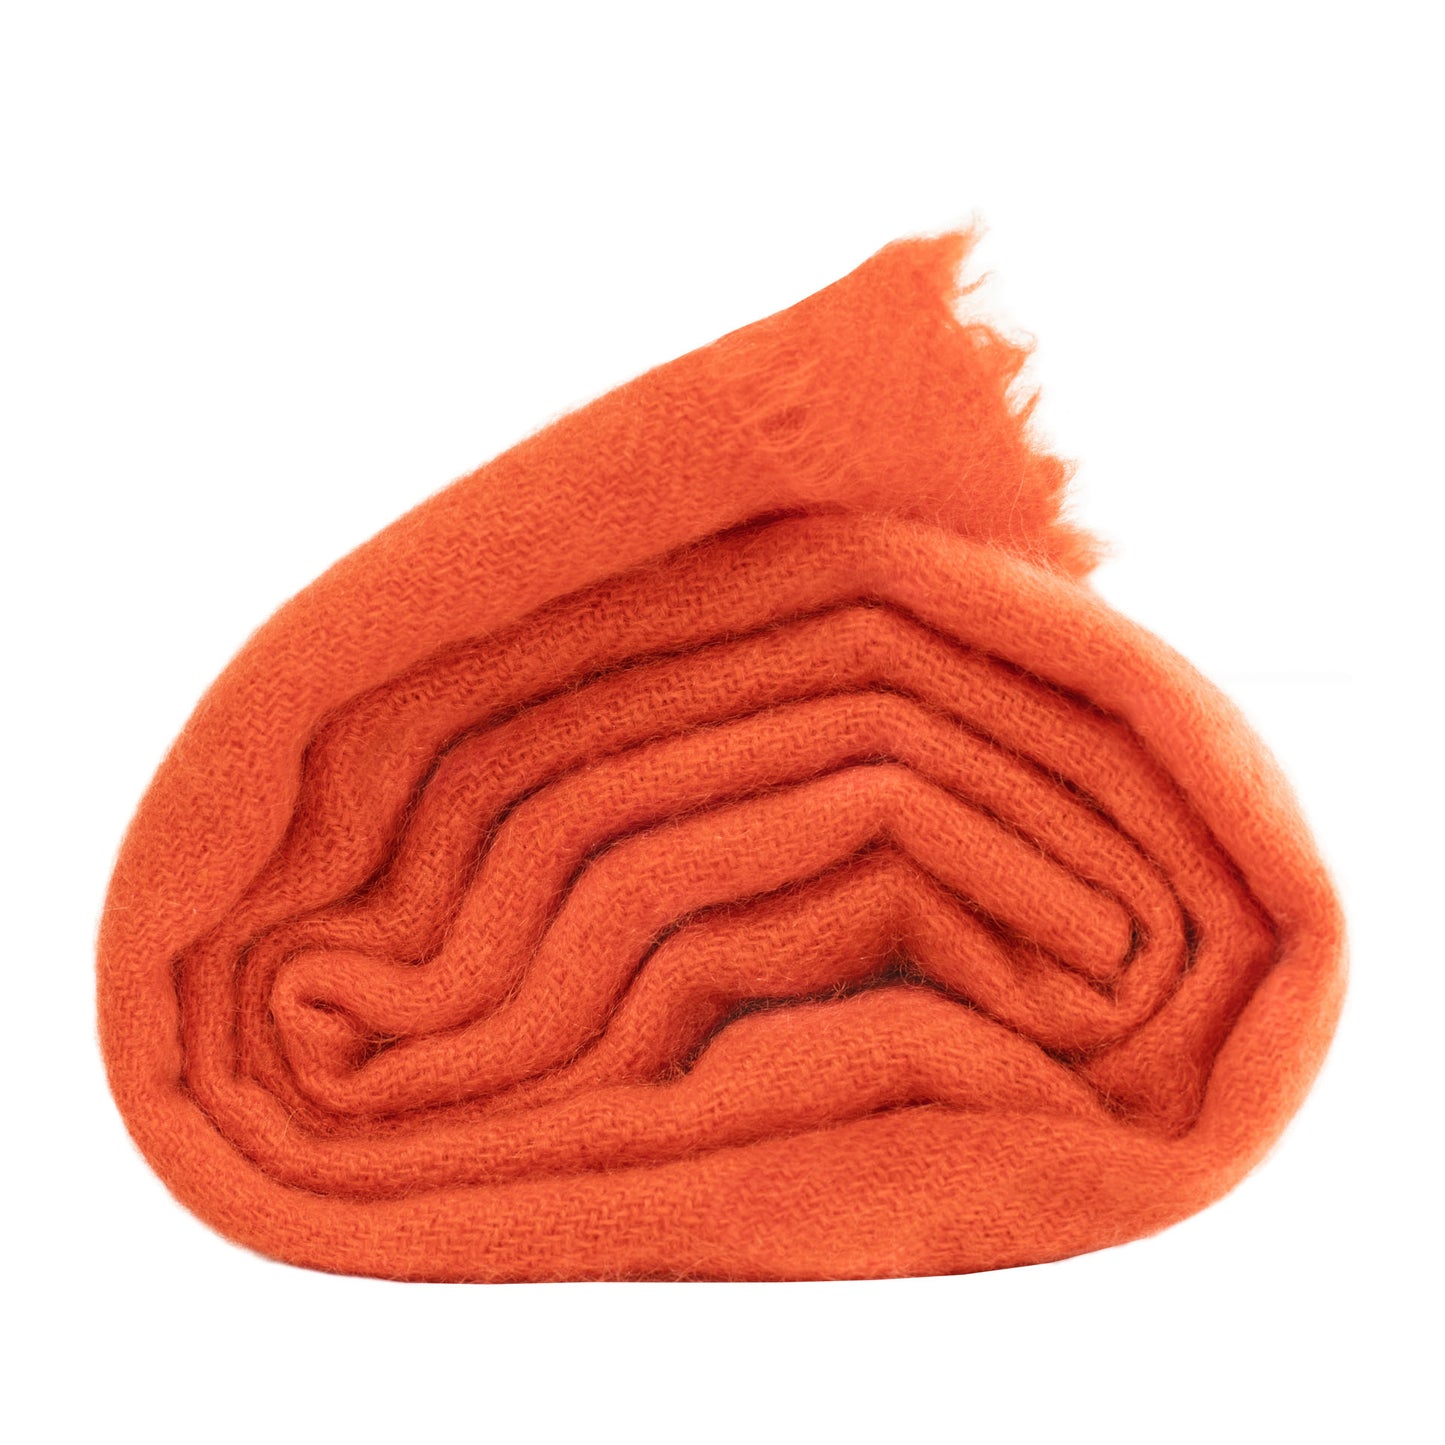 Cashmere woven shawl Orange